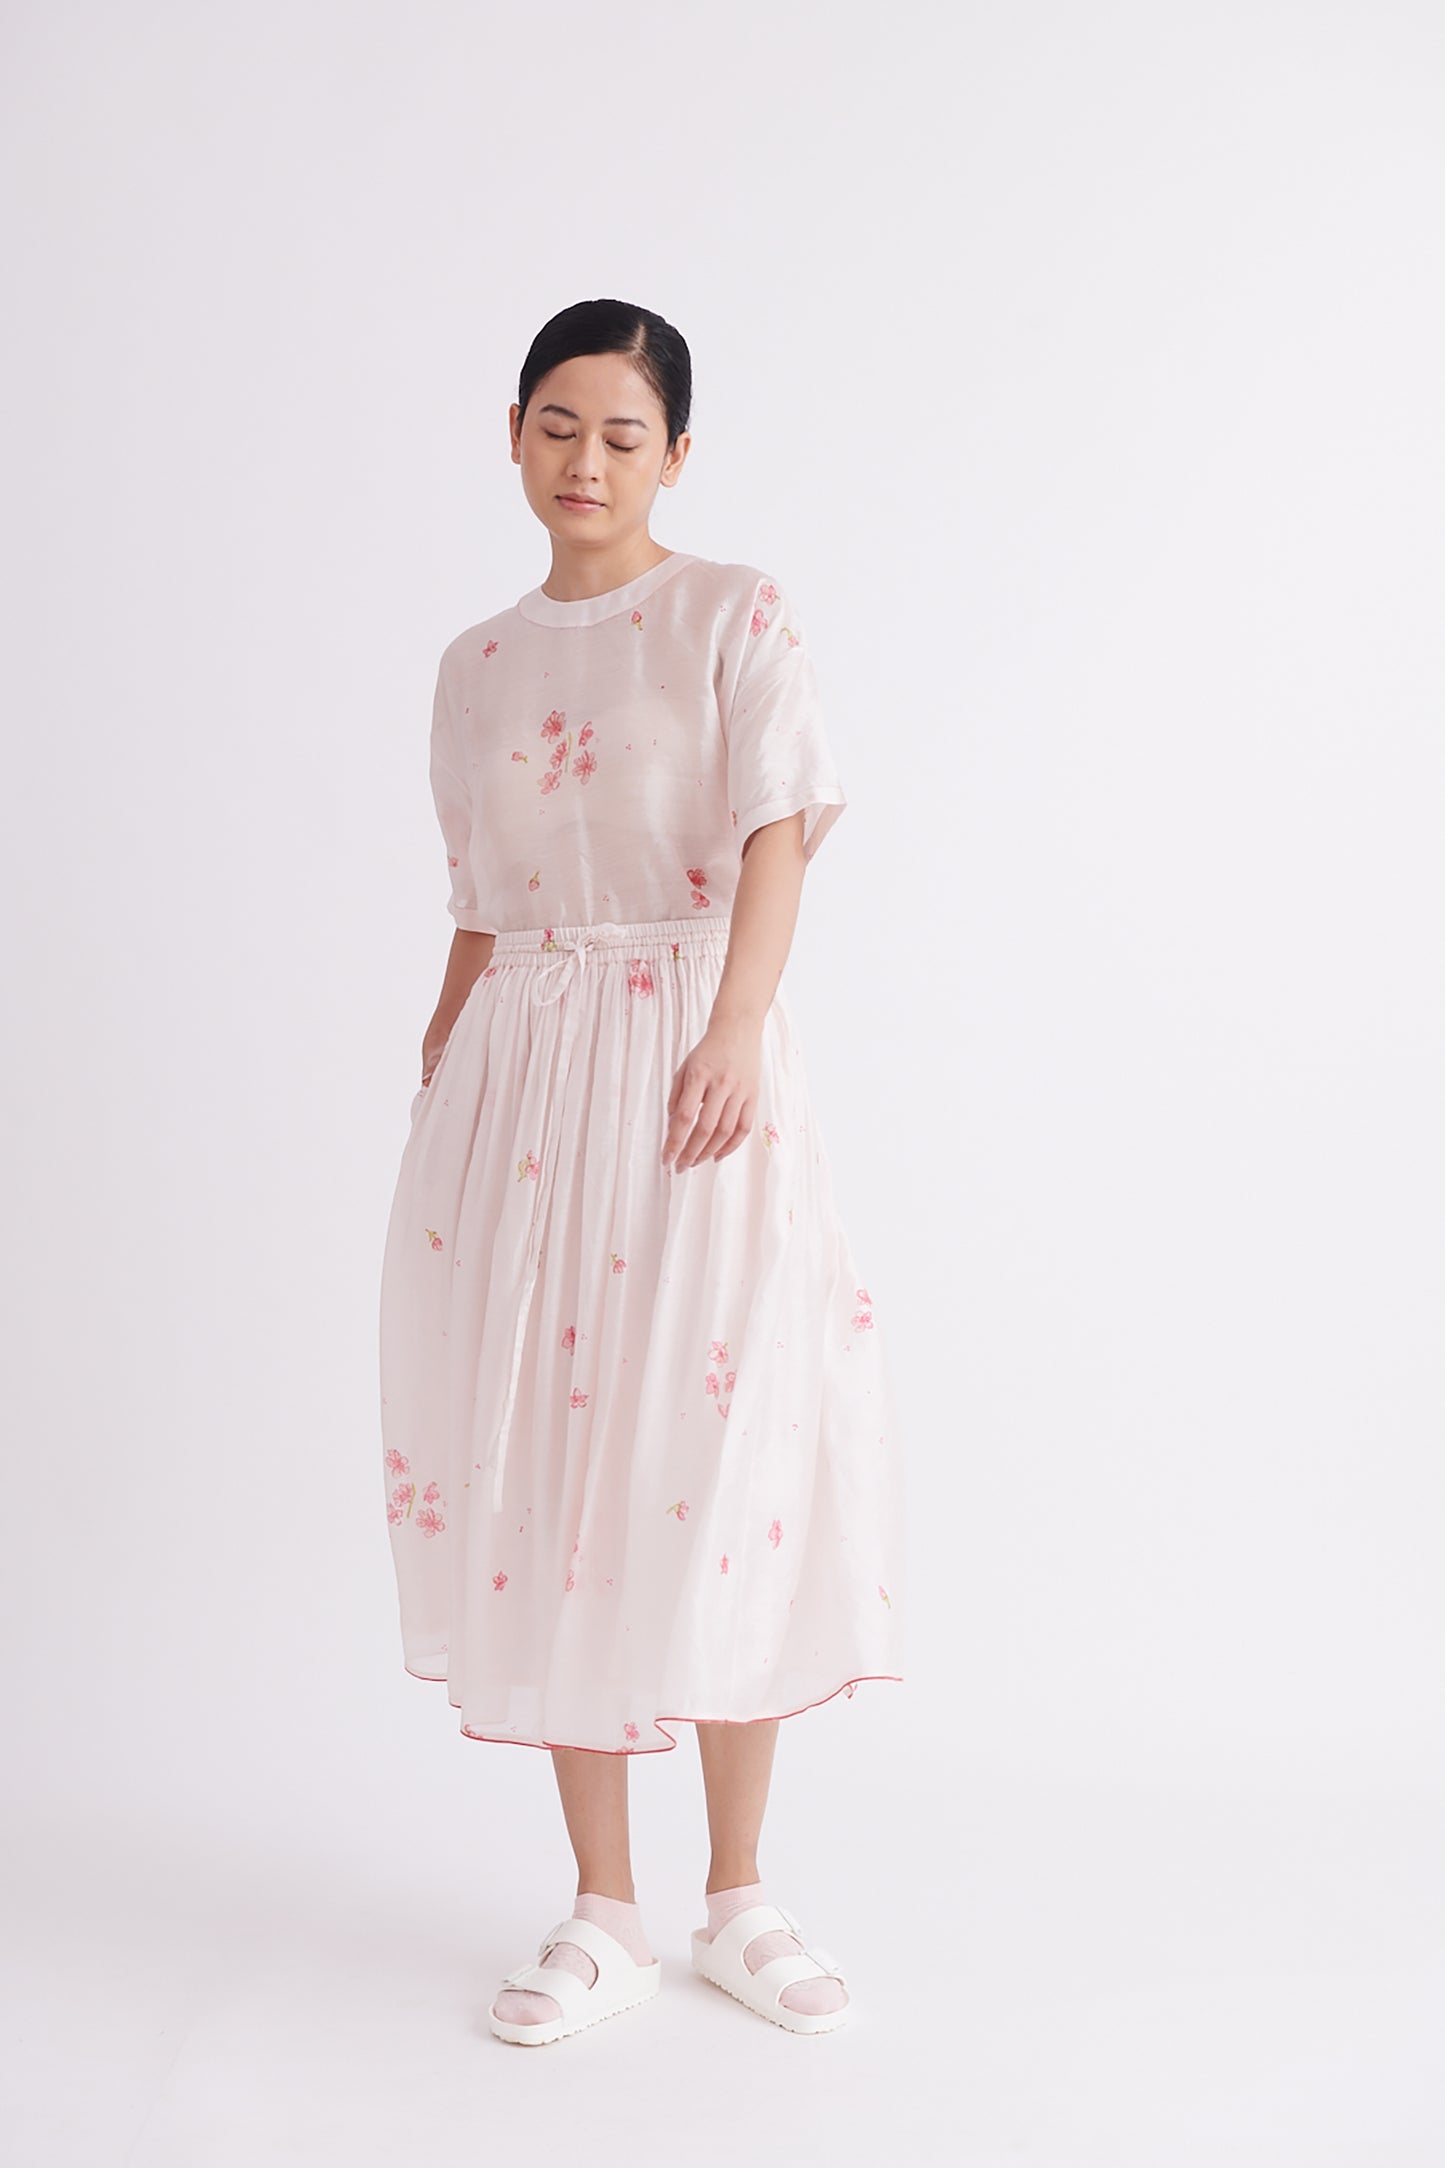 Bella Silk Skirt in Floral Print